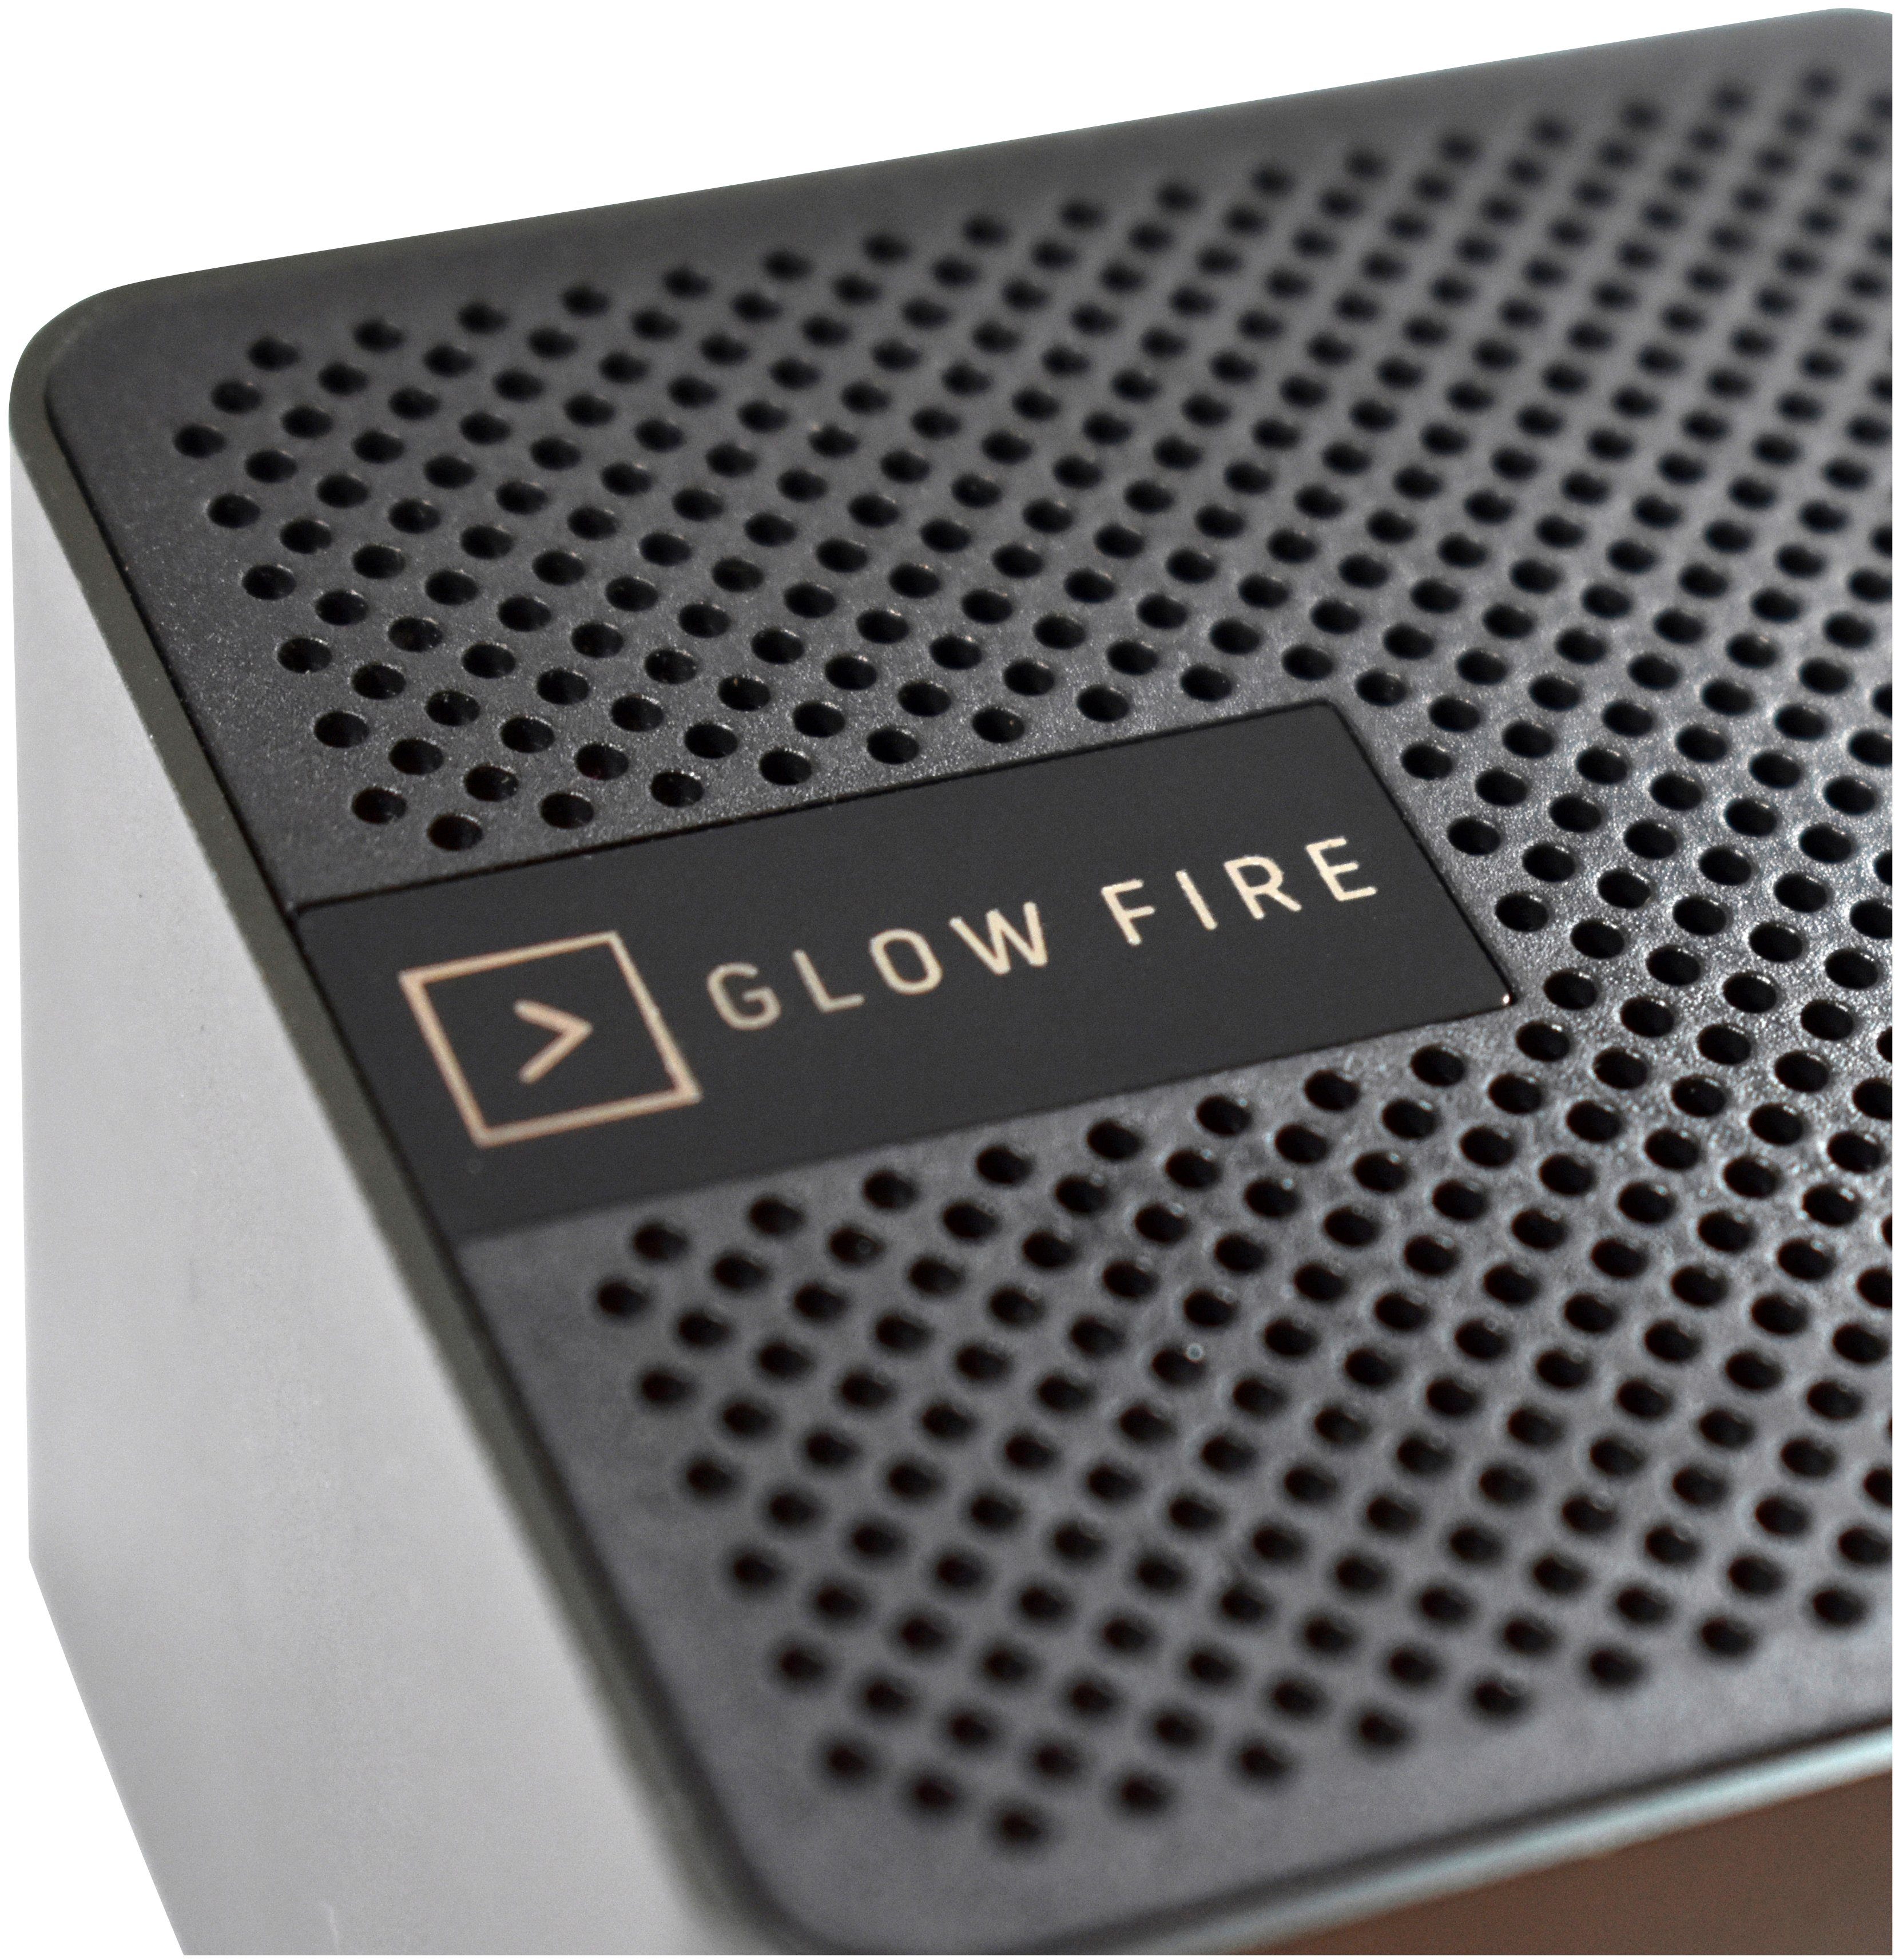 GLOW FIRE 4 Ethanolkamin, für Knistereffekt Soundbox SD usw. mit Bluetooth-Lautsprecher E-Kamin Karte (Bluetooth, GB)